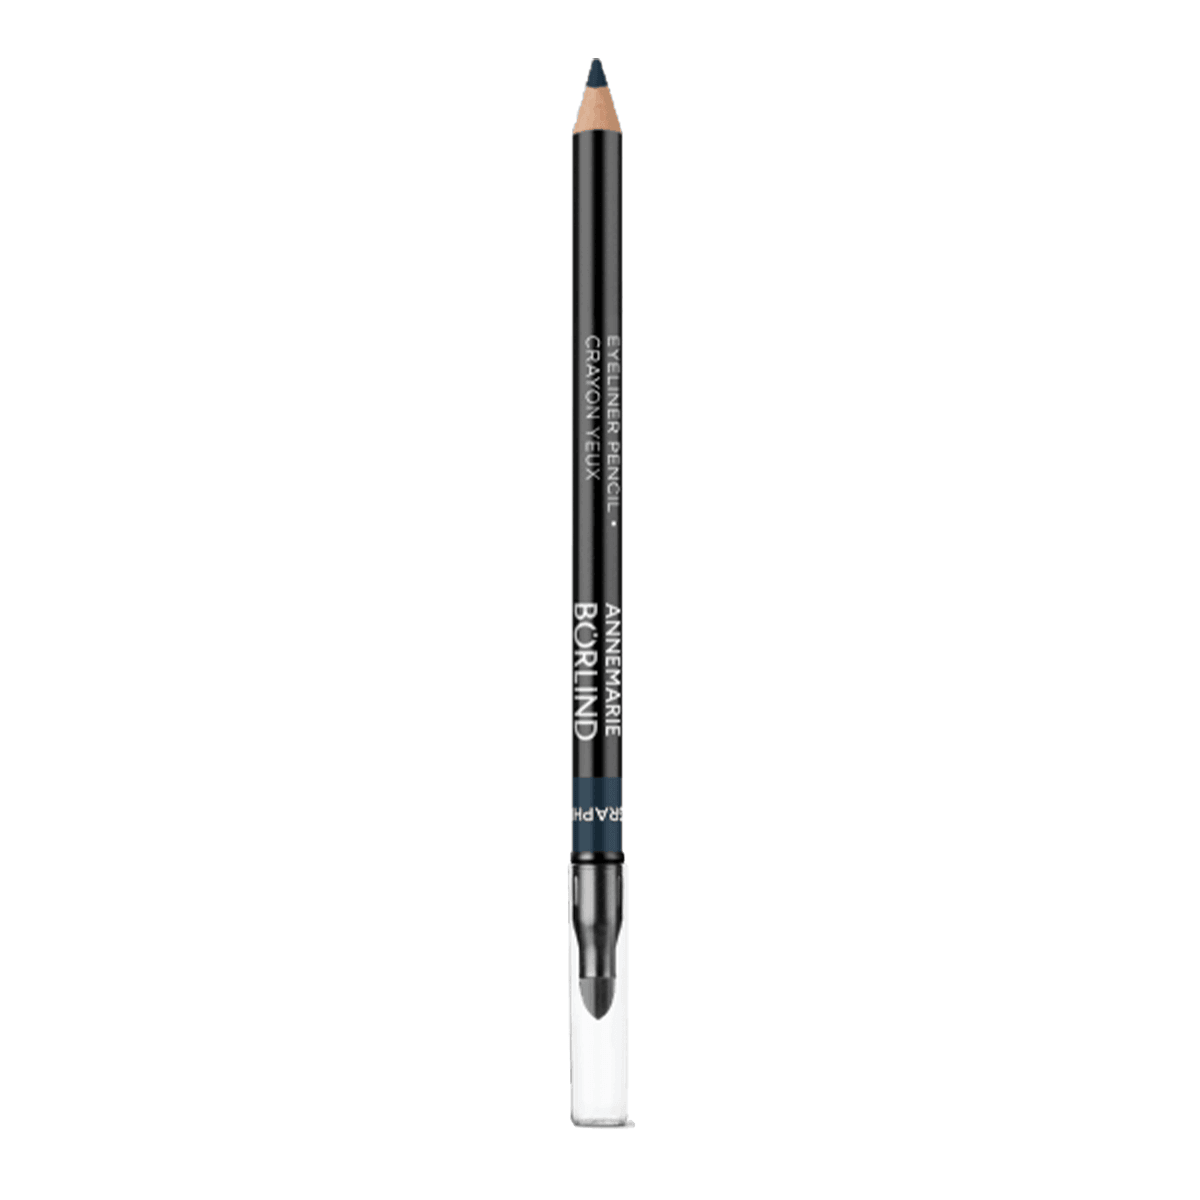 Annemarie Borlind Eyeliner Pencil Graphite 1g Cosmetics - Eye Makeup at Village Vitamin Store